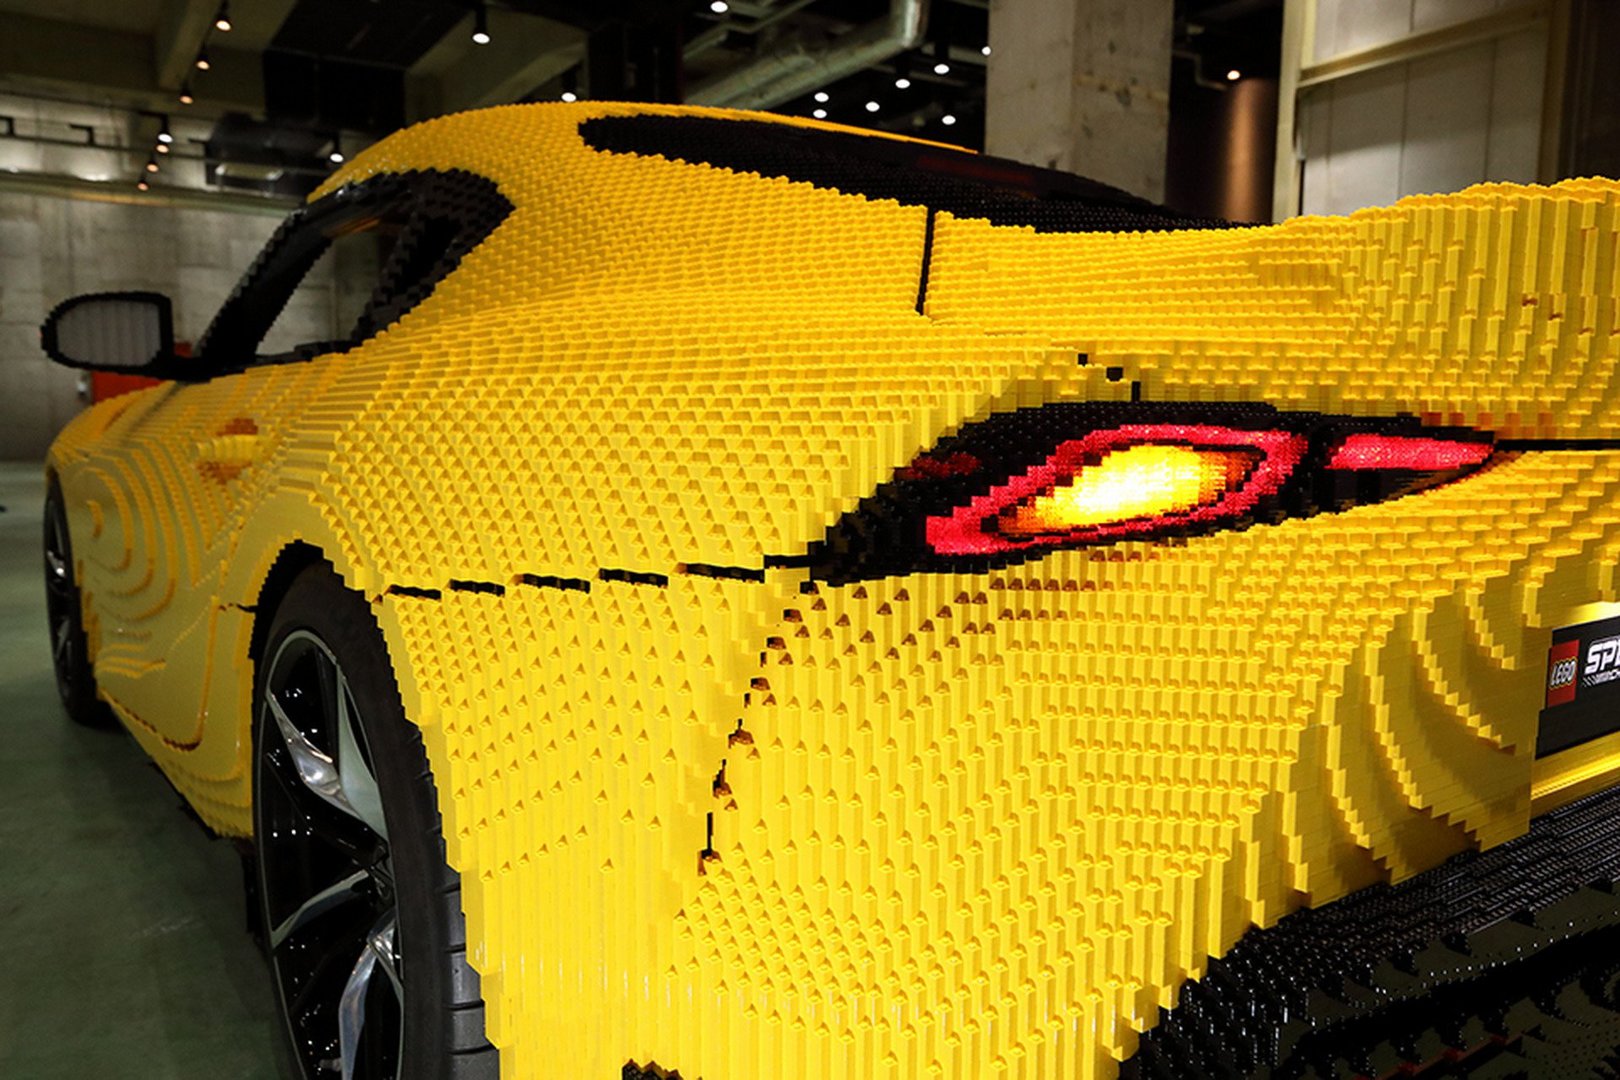 Swedish Enthusiast Constructs Life-Size Car from LEGO Bricks